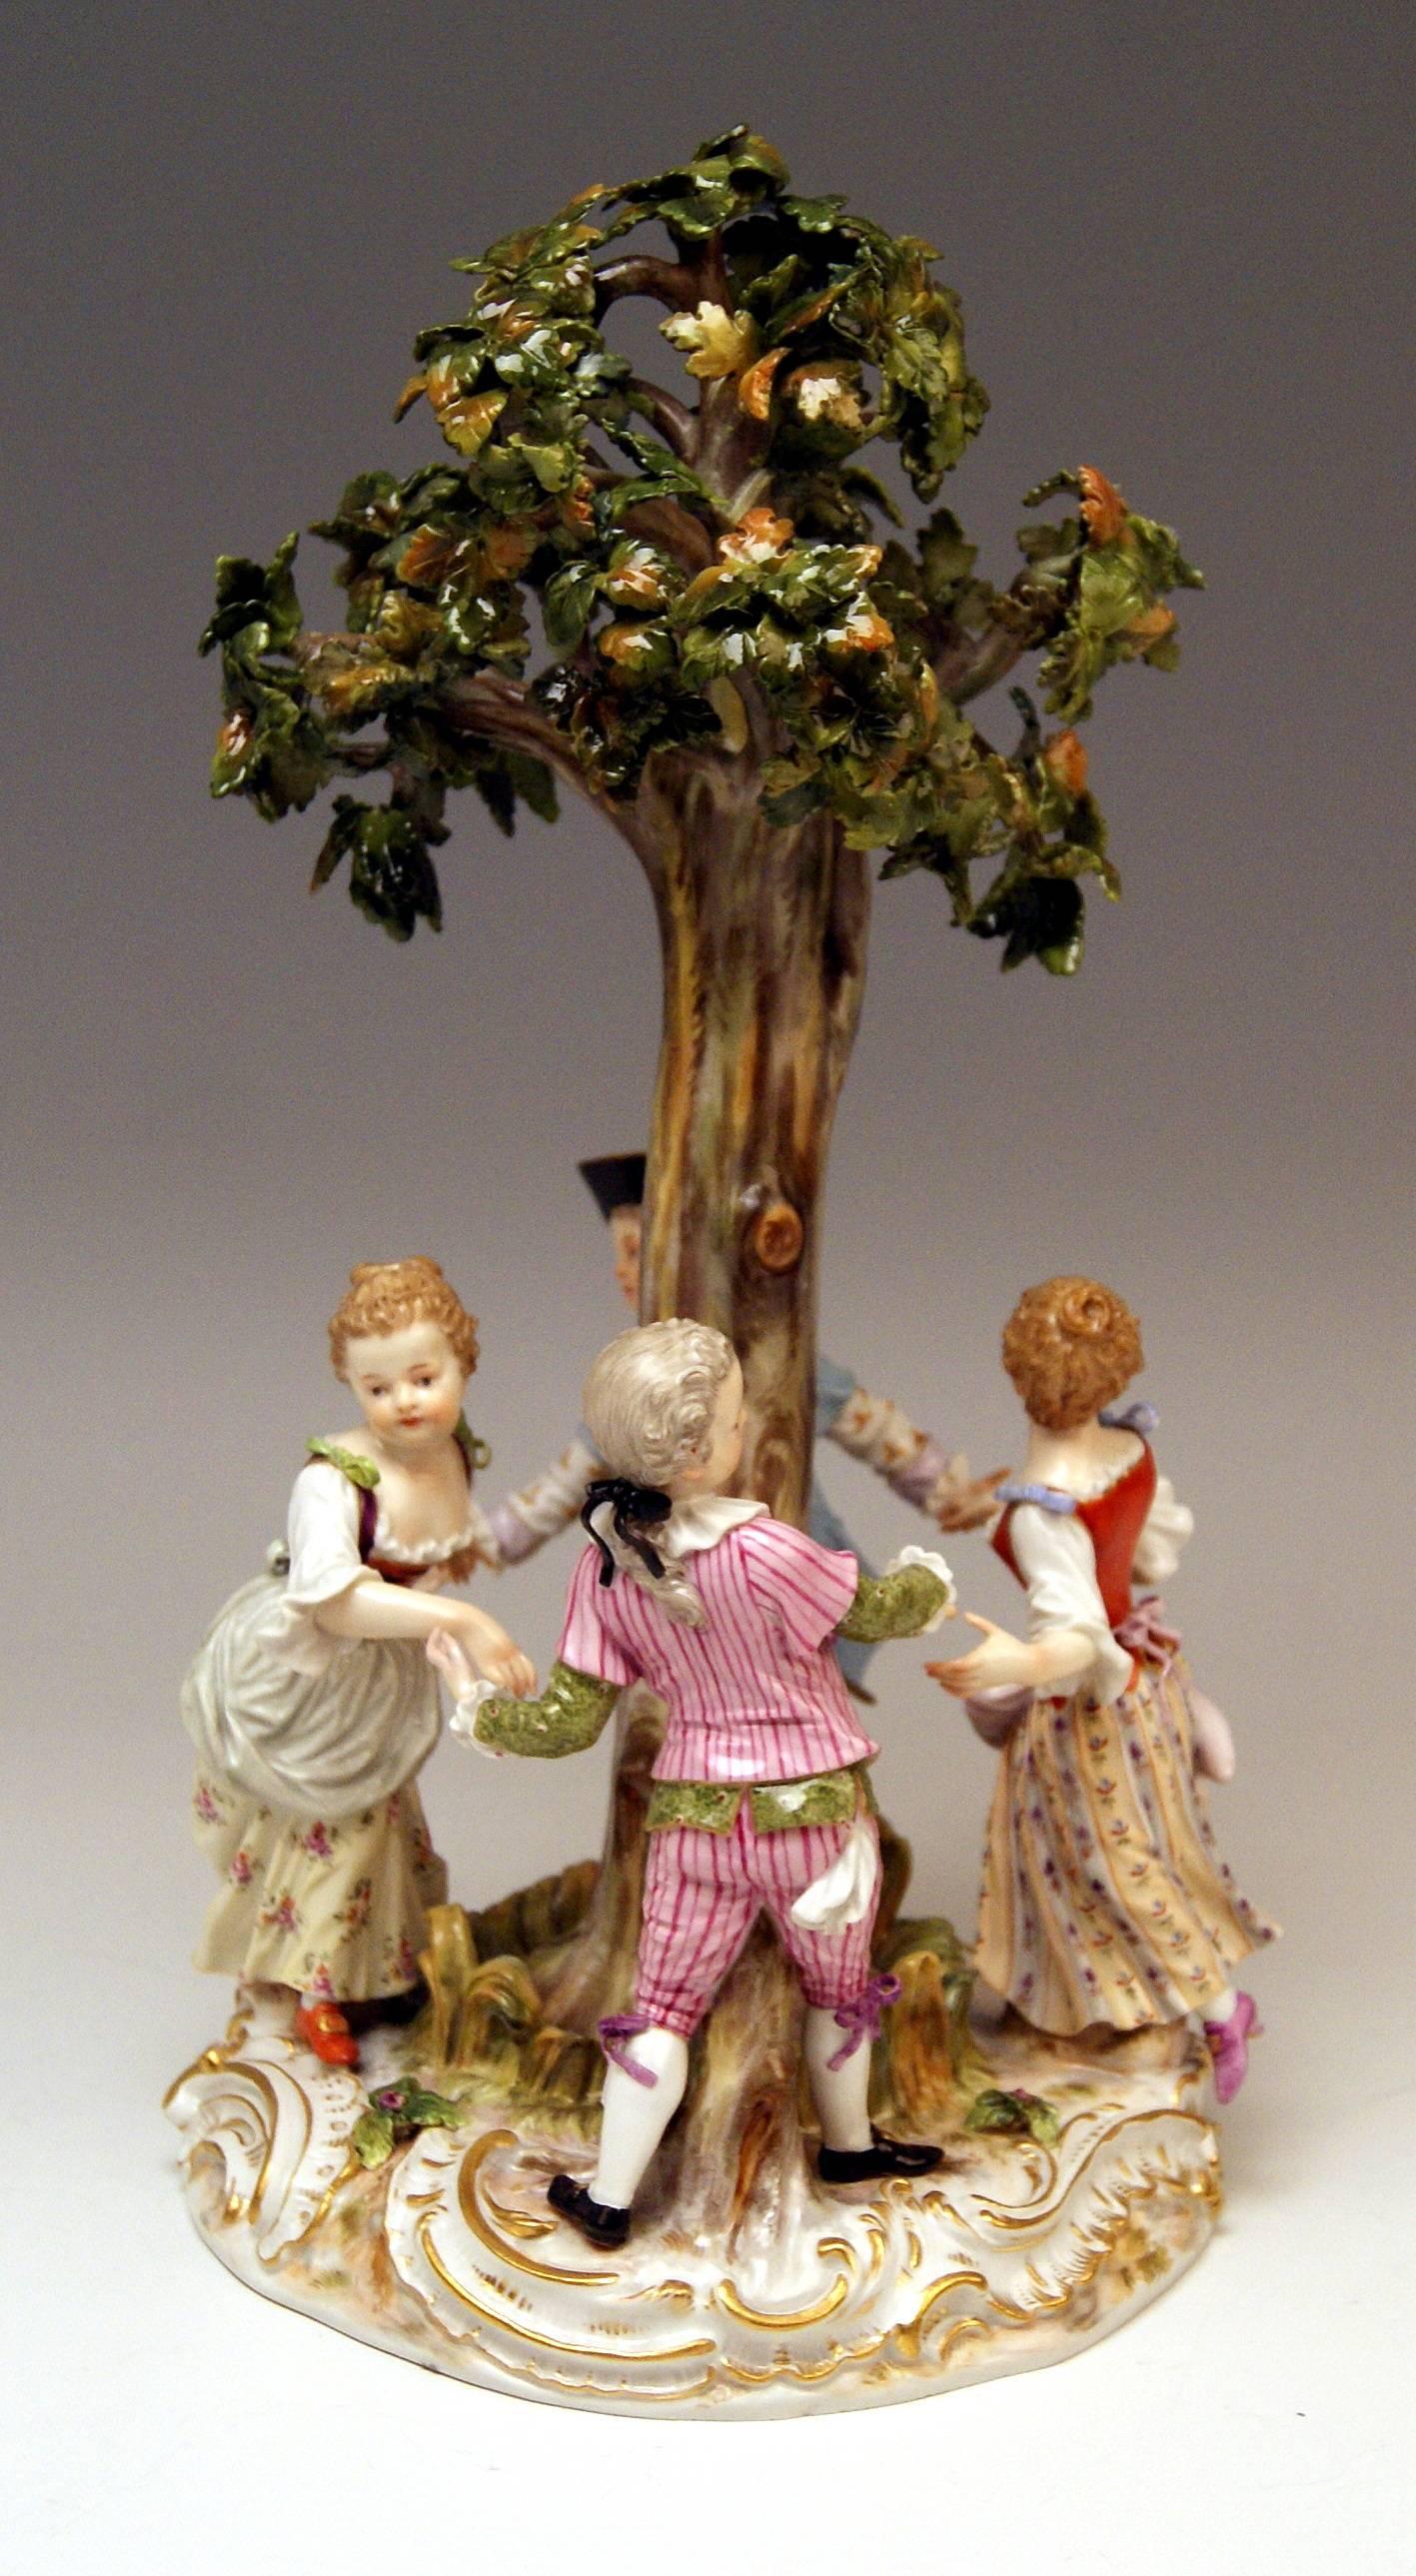 Meissen Gorgeous Figurine Group:
Dancing Boys And Girls / Gardener Children Under A Tree / The Details Are Stunningly Scupltured = Finest Modelling

Design:
-- Johann Joachim Kaendler (1706-1775)
The sculptor was since year 1731 modeller of